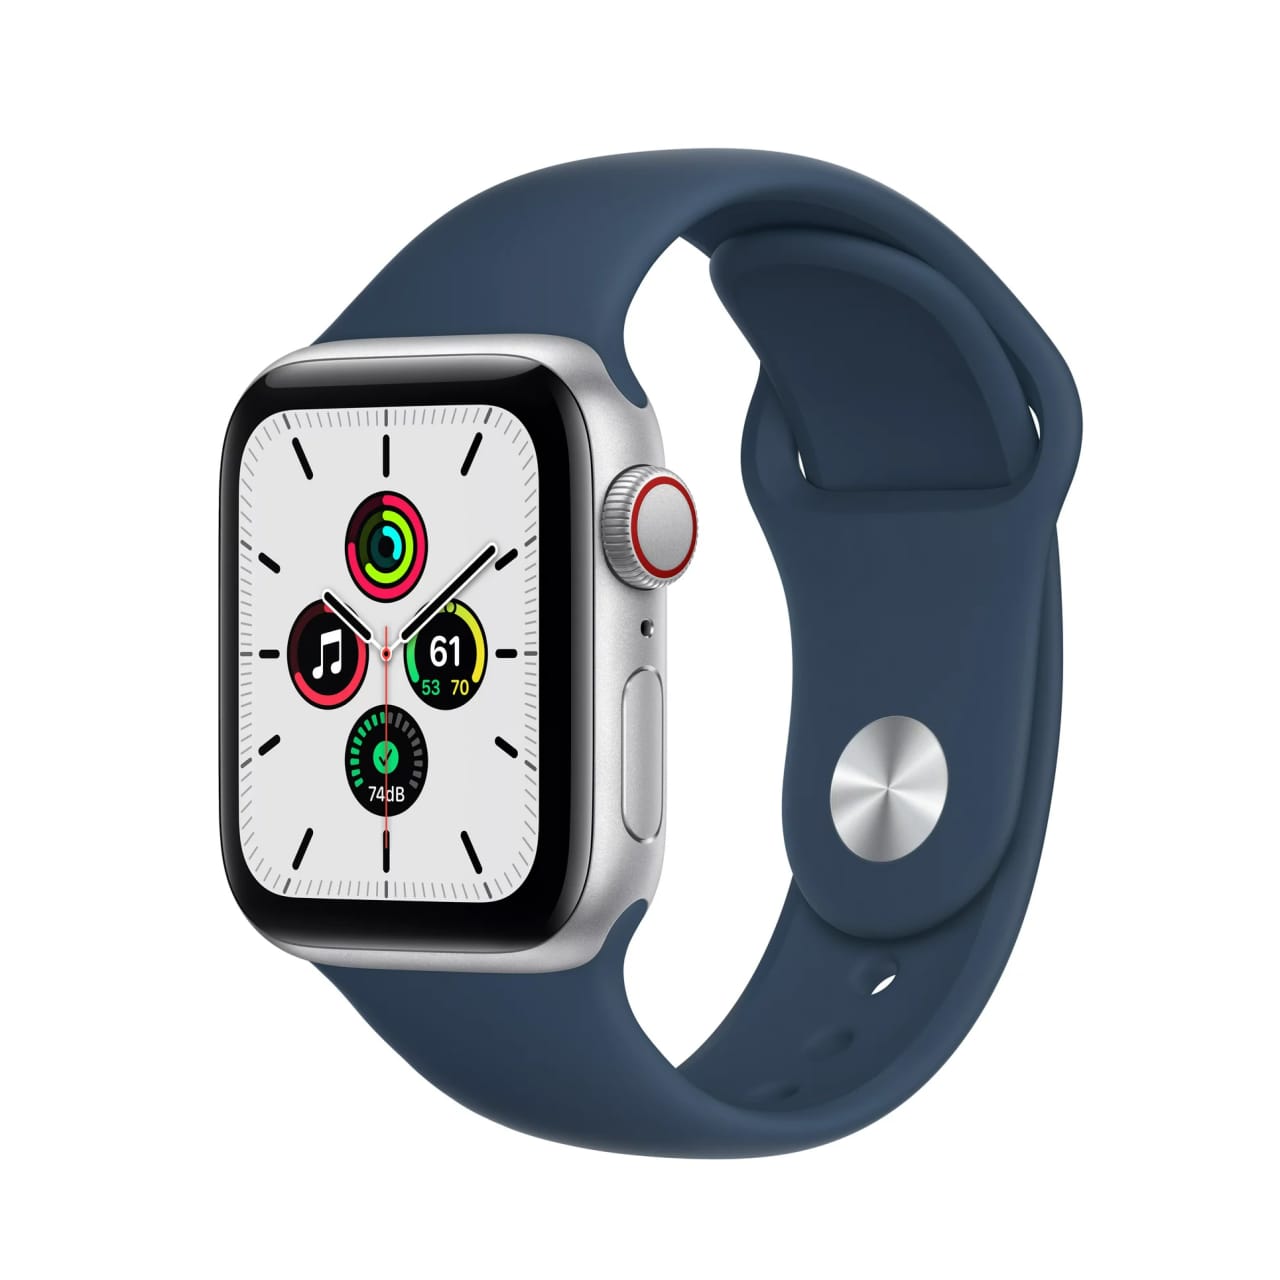 Apple Watch SE (1st generation)